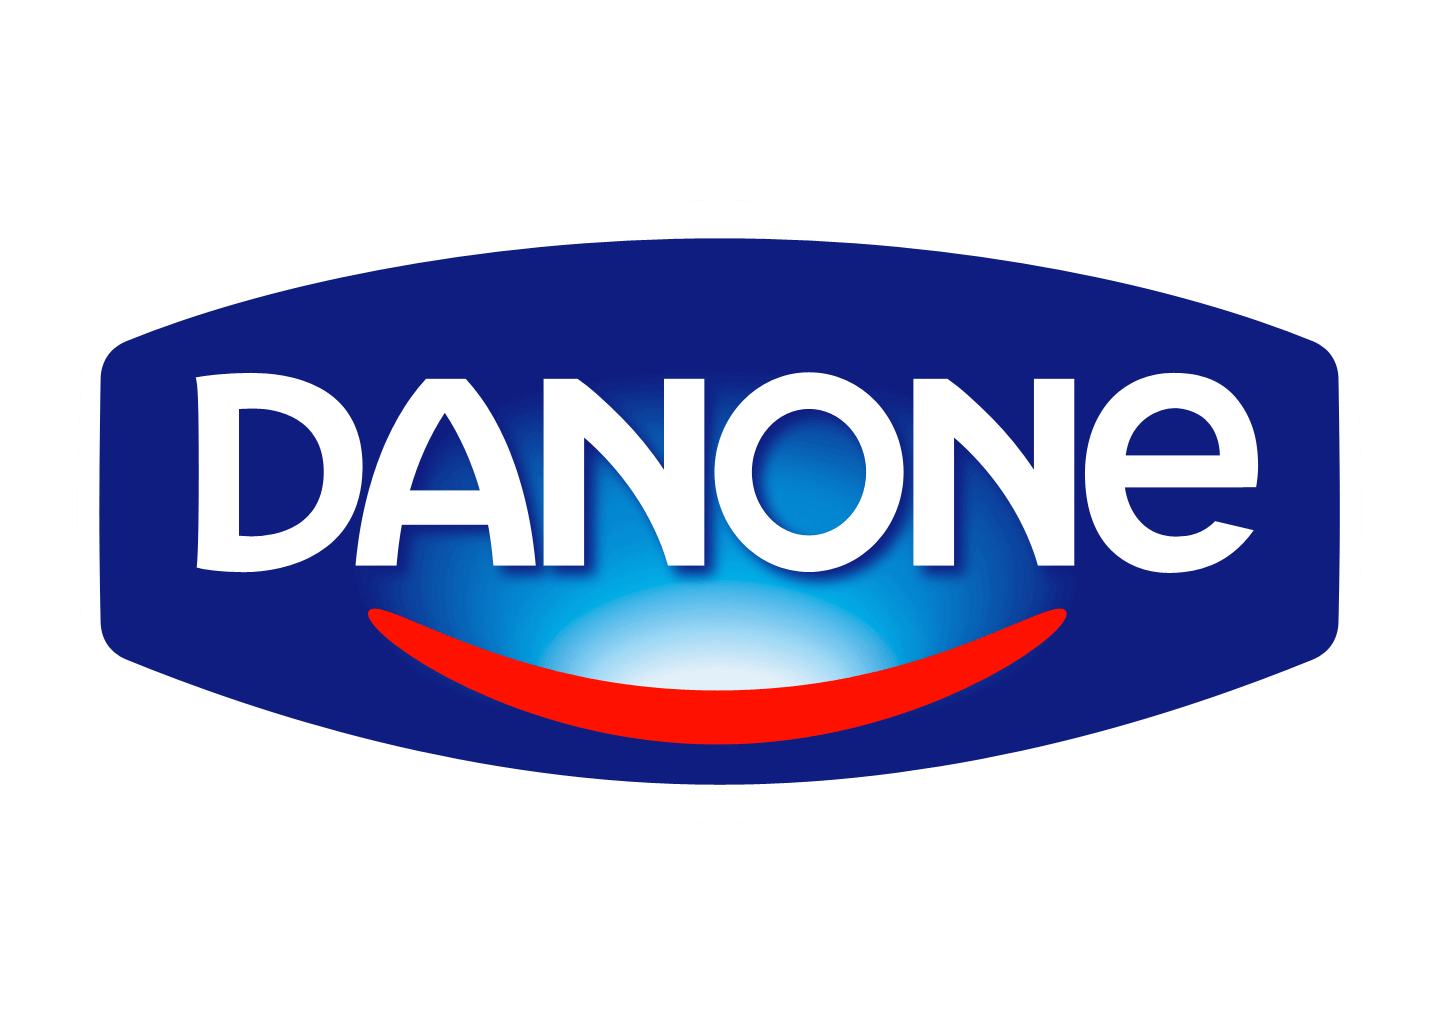 Danone-brand-logo